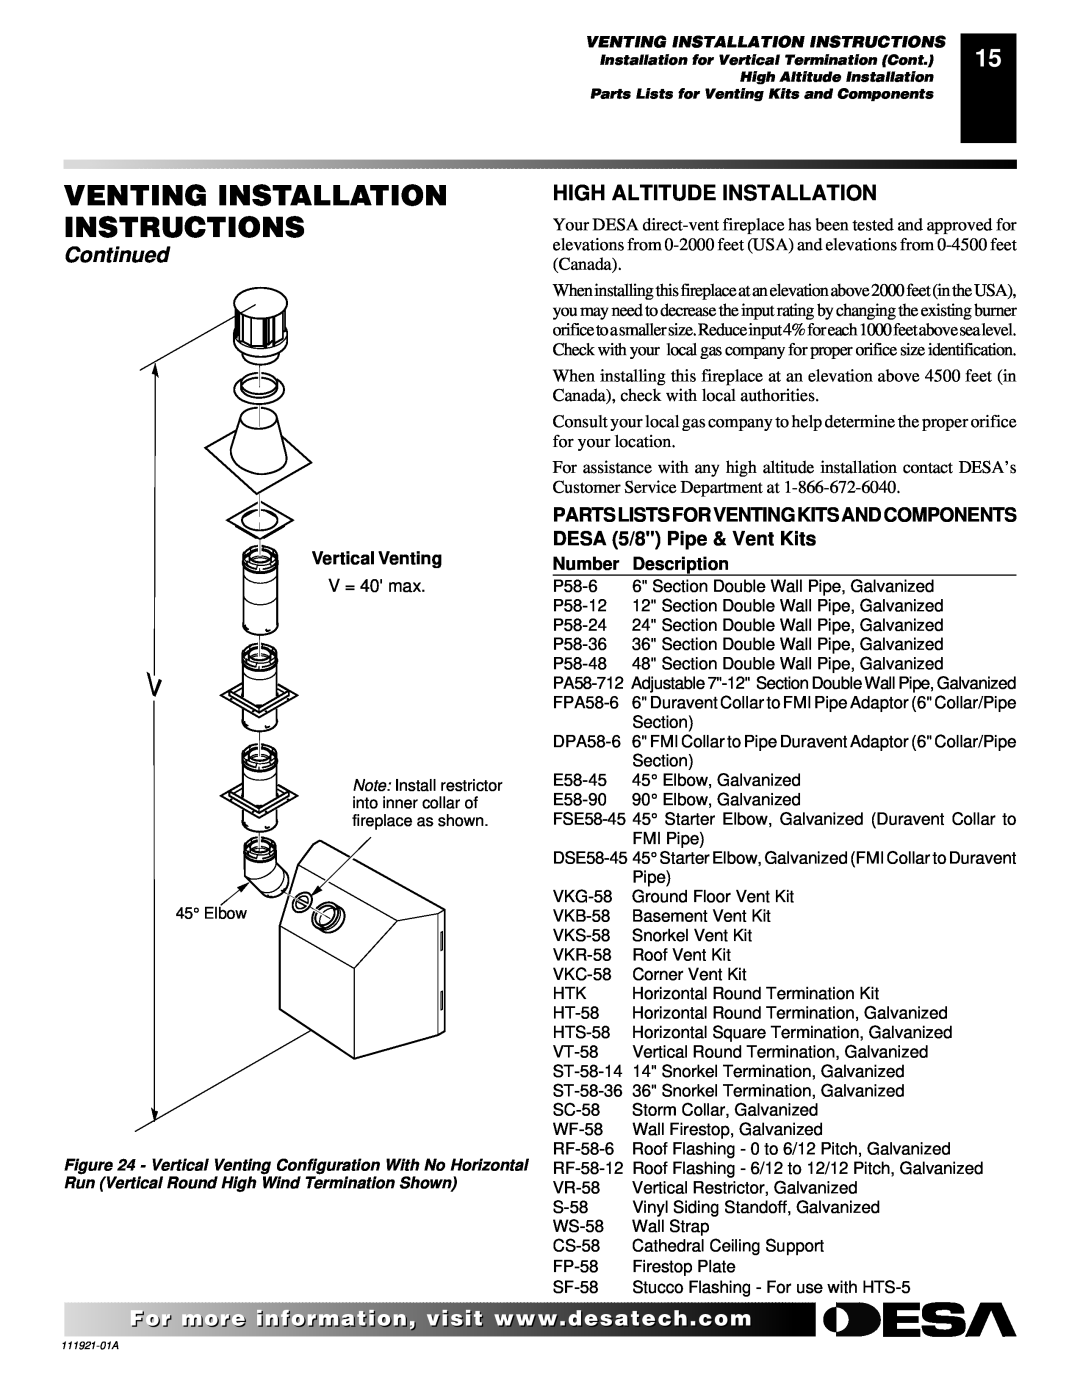 Desa (V)K42N High Altitude Installation, Venting Installation Instructions, Continued, Vertical Venting, Number 